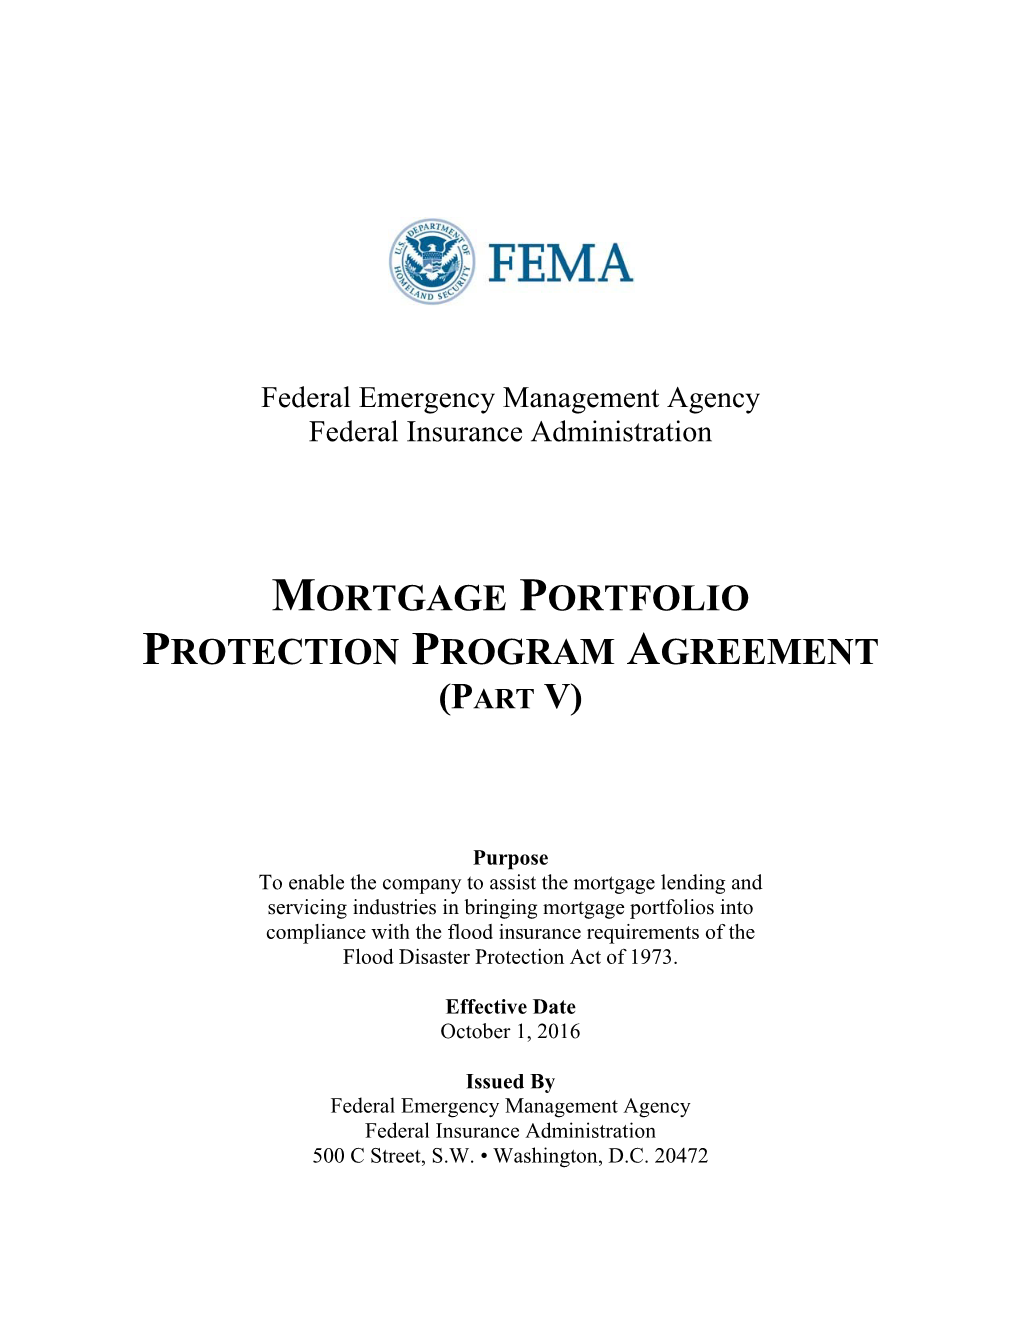 Mortgage Portfolio Protection Program Agreement (Part V)